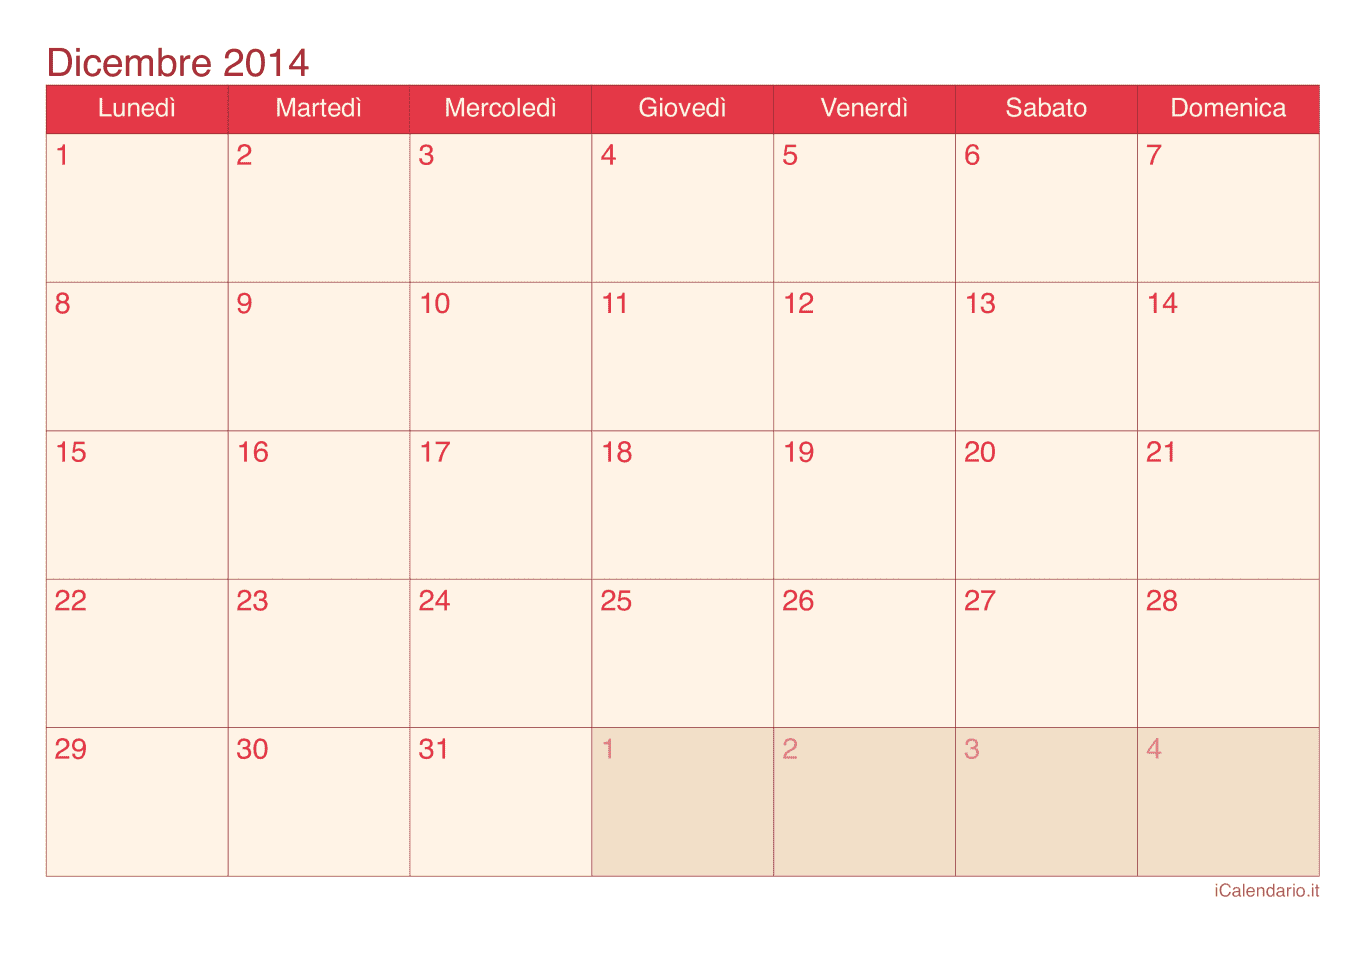 Calendario di dicembre 2014 - Cherry